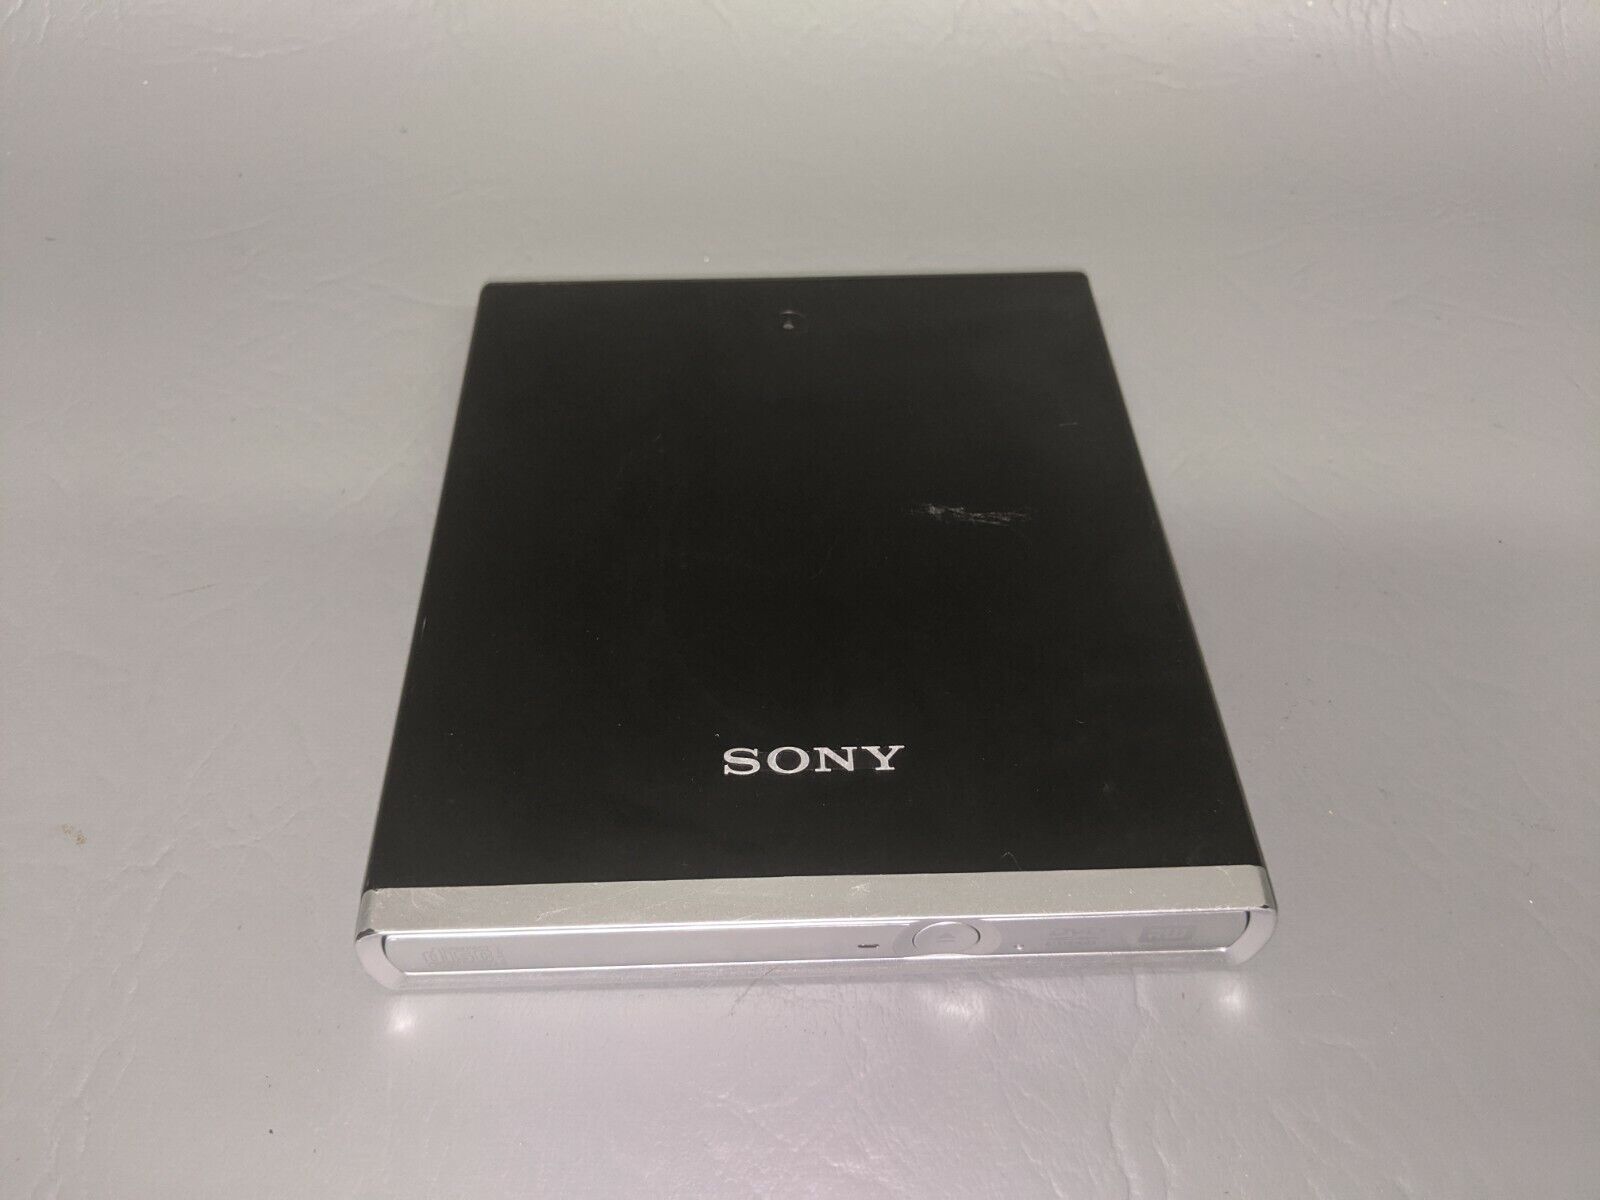 Sony DRX-S70U-R Black External Rewriteable DVD/CD Drive (4B)